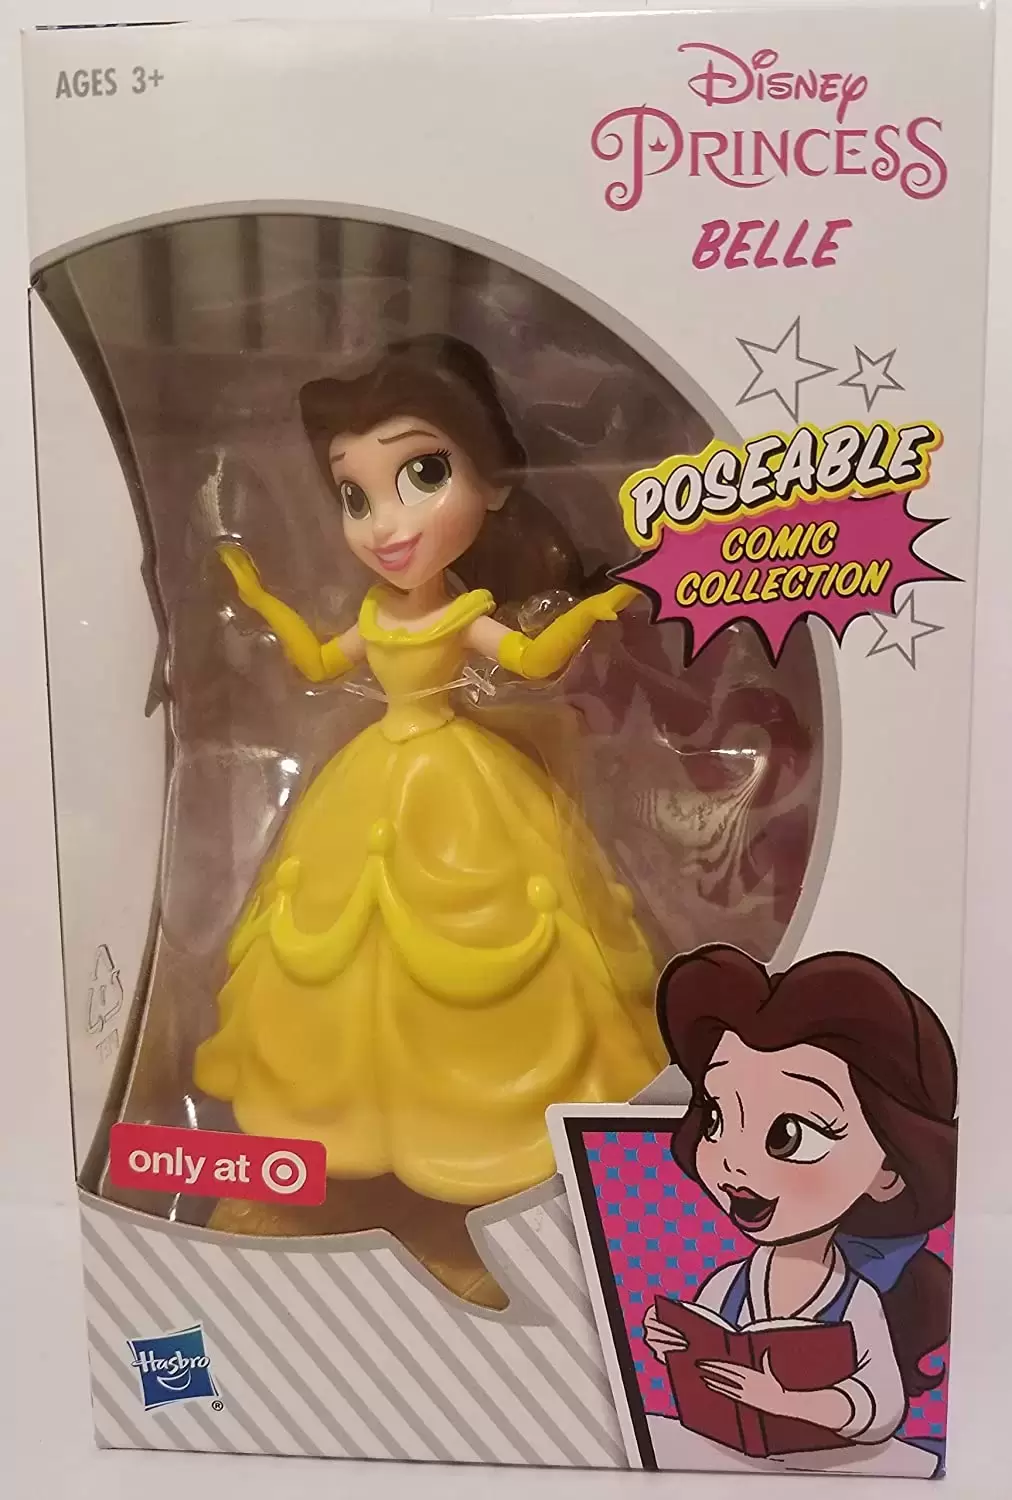 Disney Princess Poseable Comic Collection - Belle